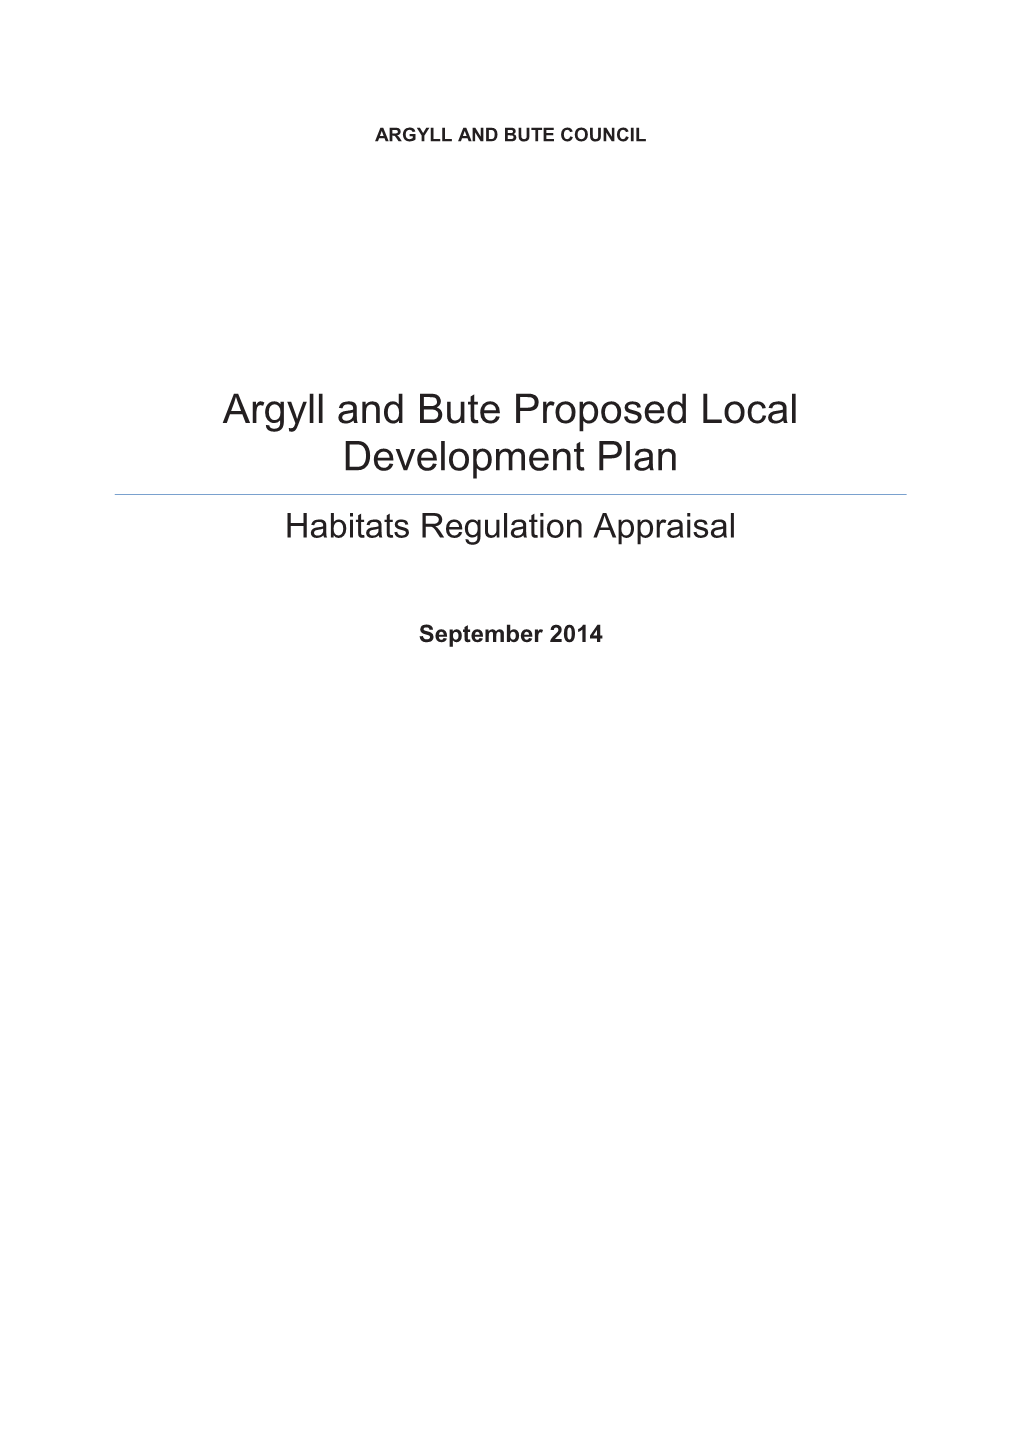 Argyll and Bute Proposed Local Development Plan Habitats Regulation Appraisal